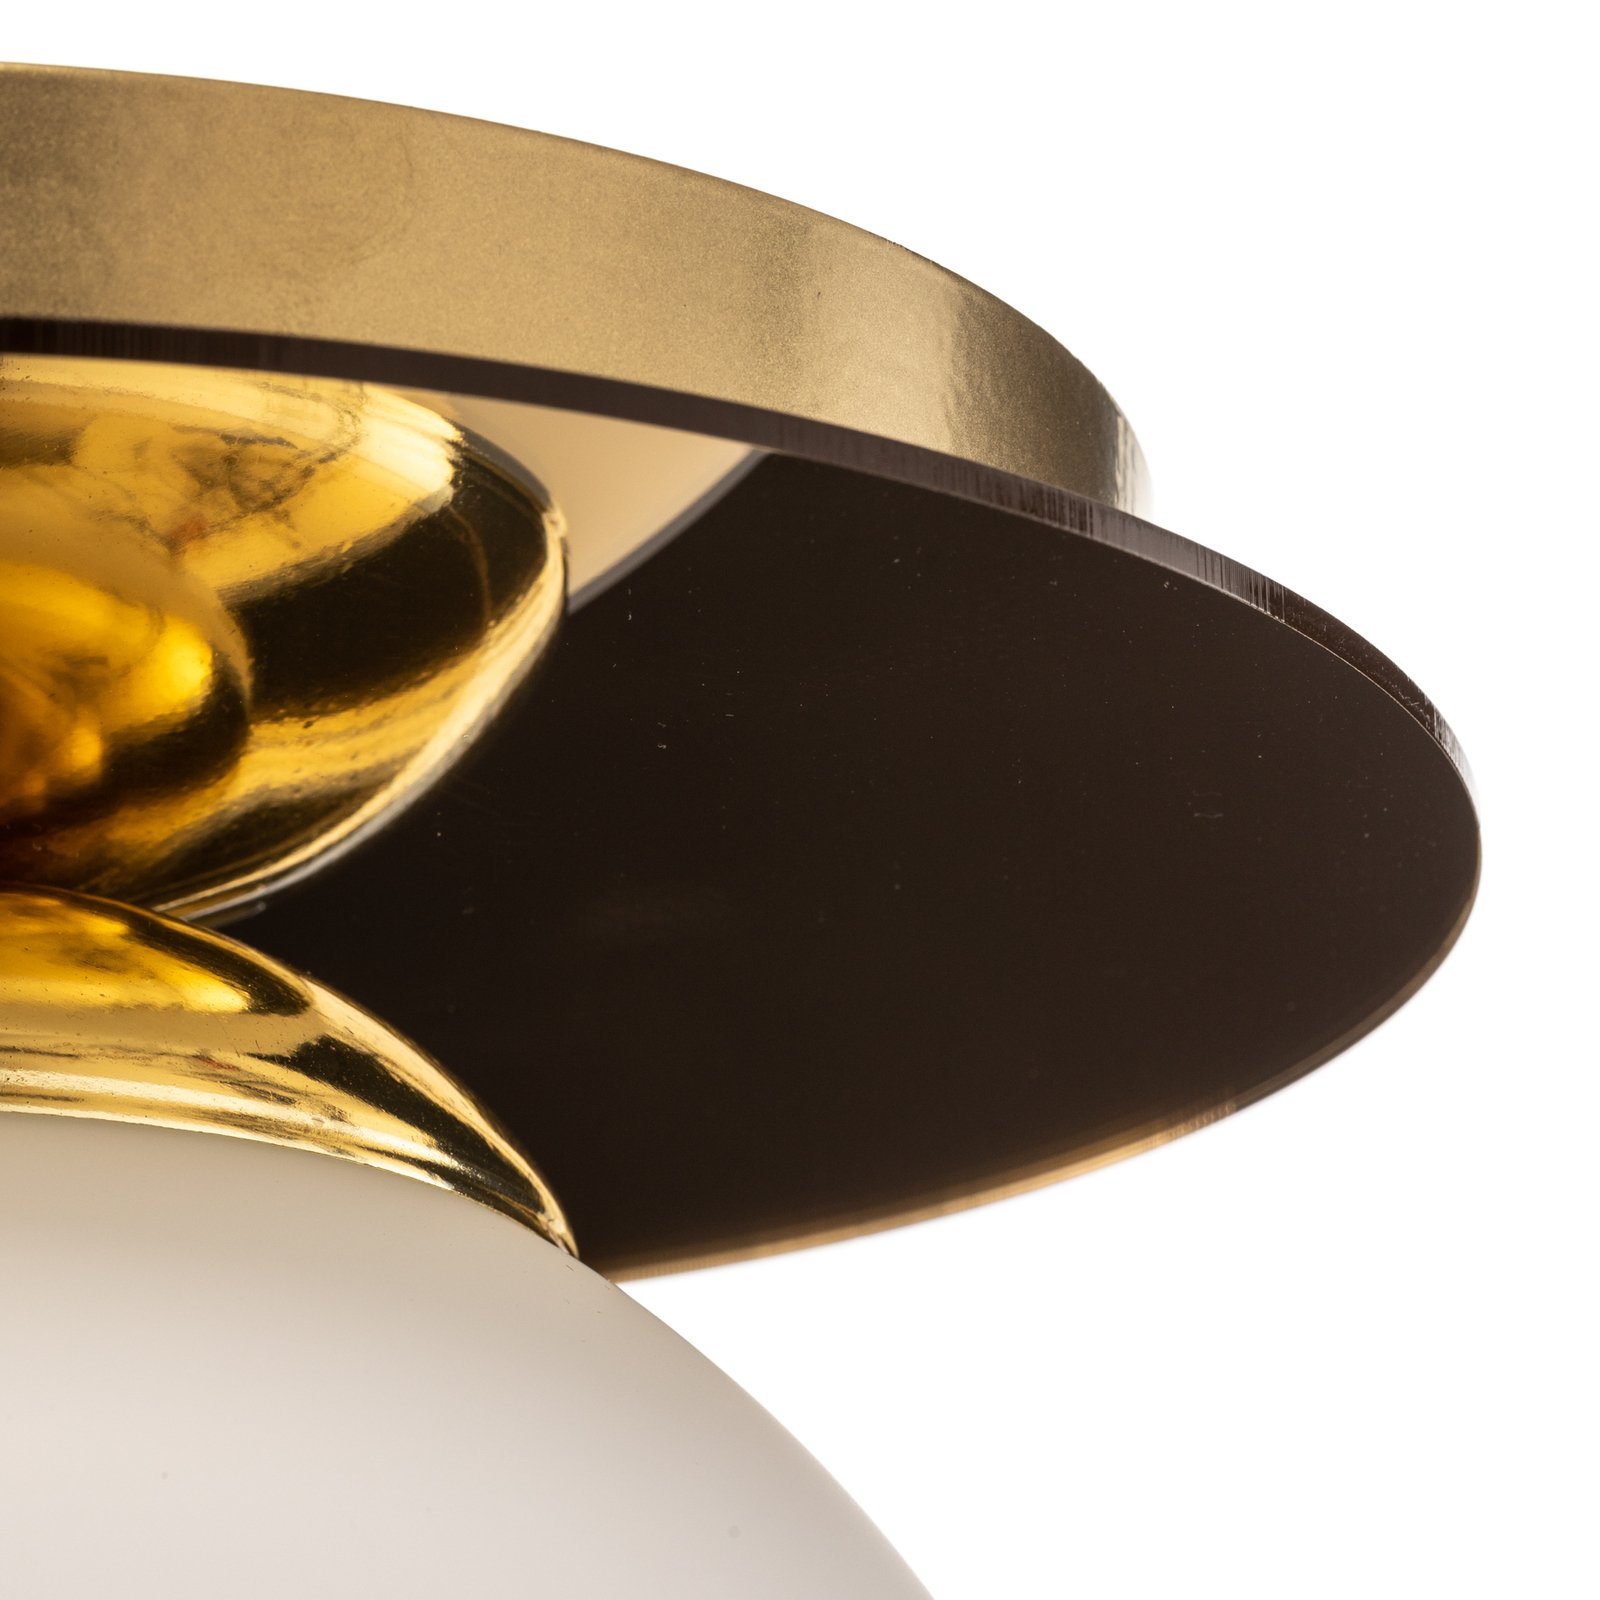 Plato plafondlamp, goudkleurig, metaal, opaalglas, Ø 25 cm